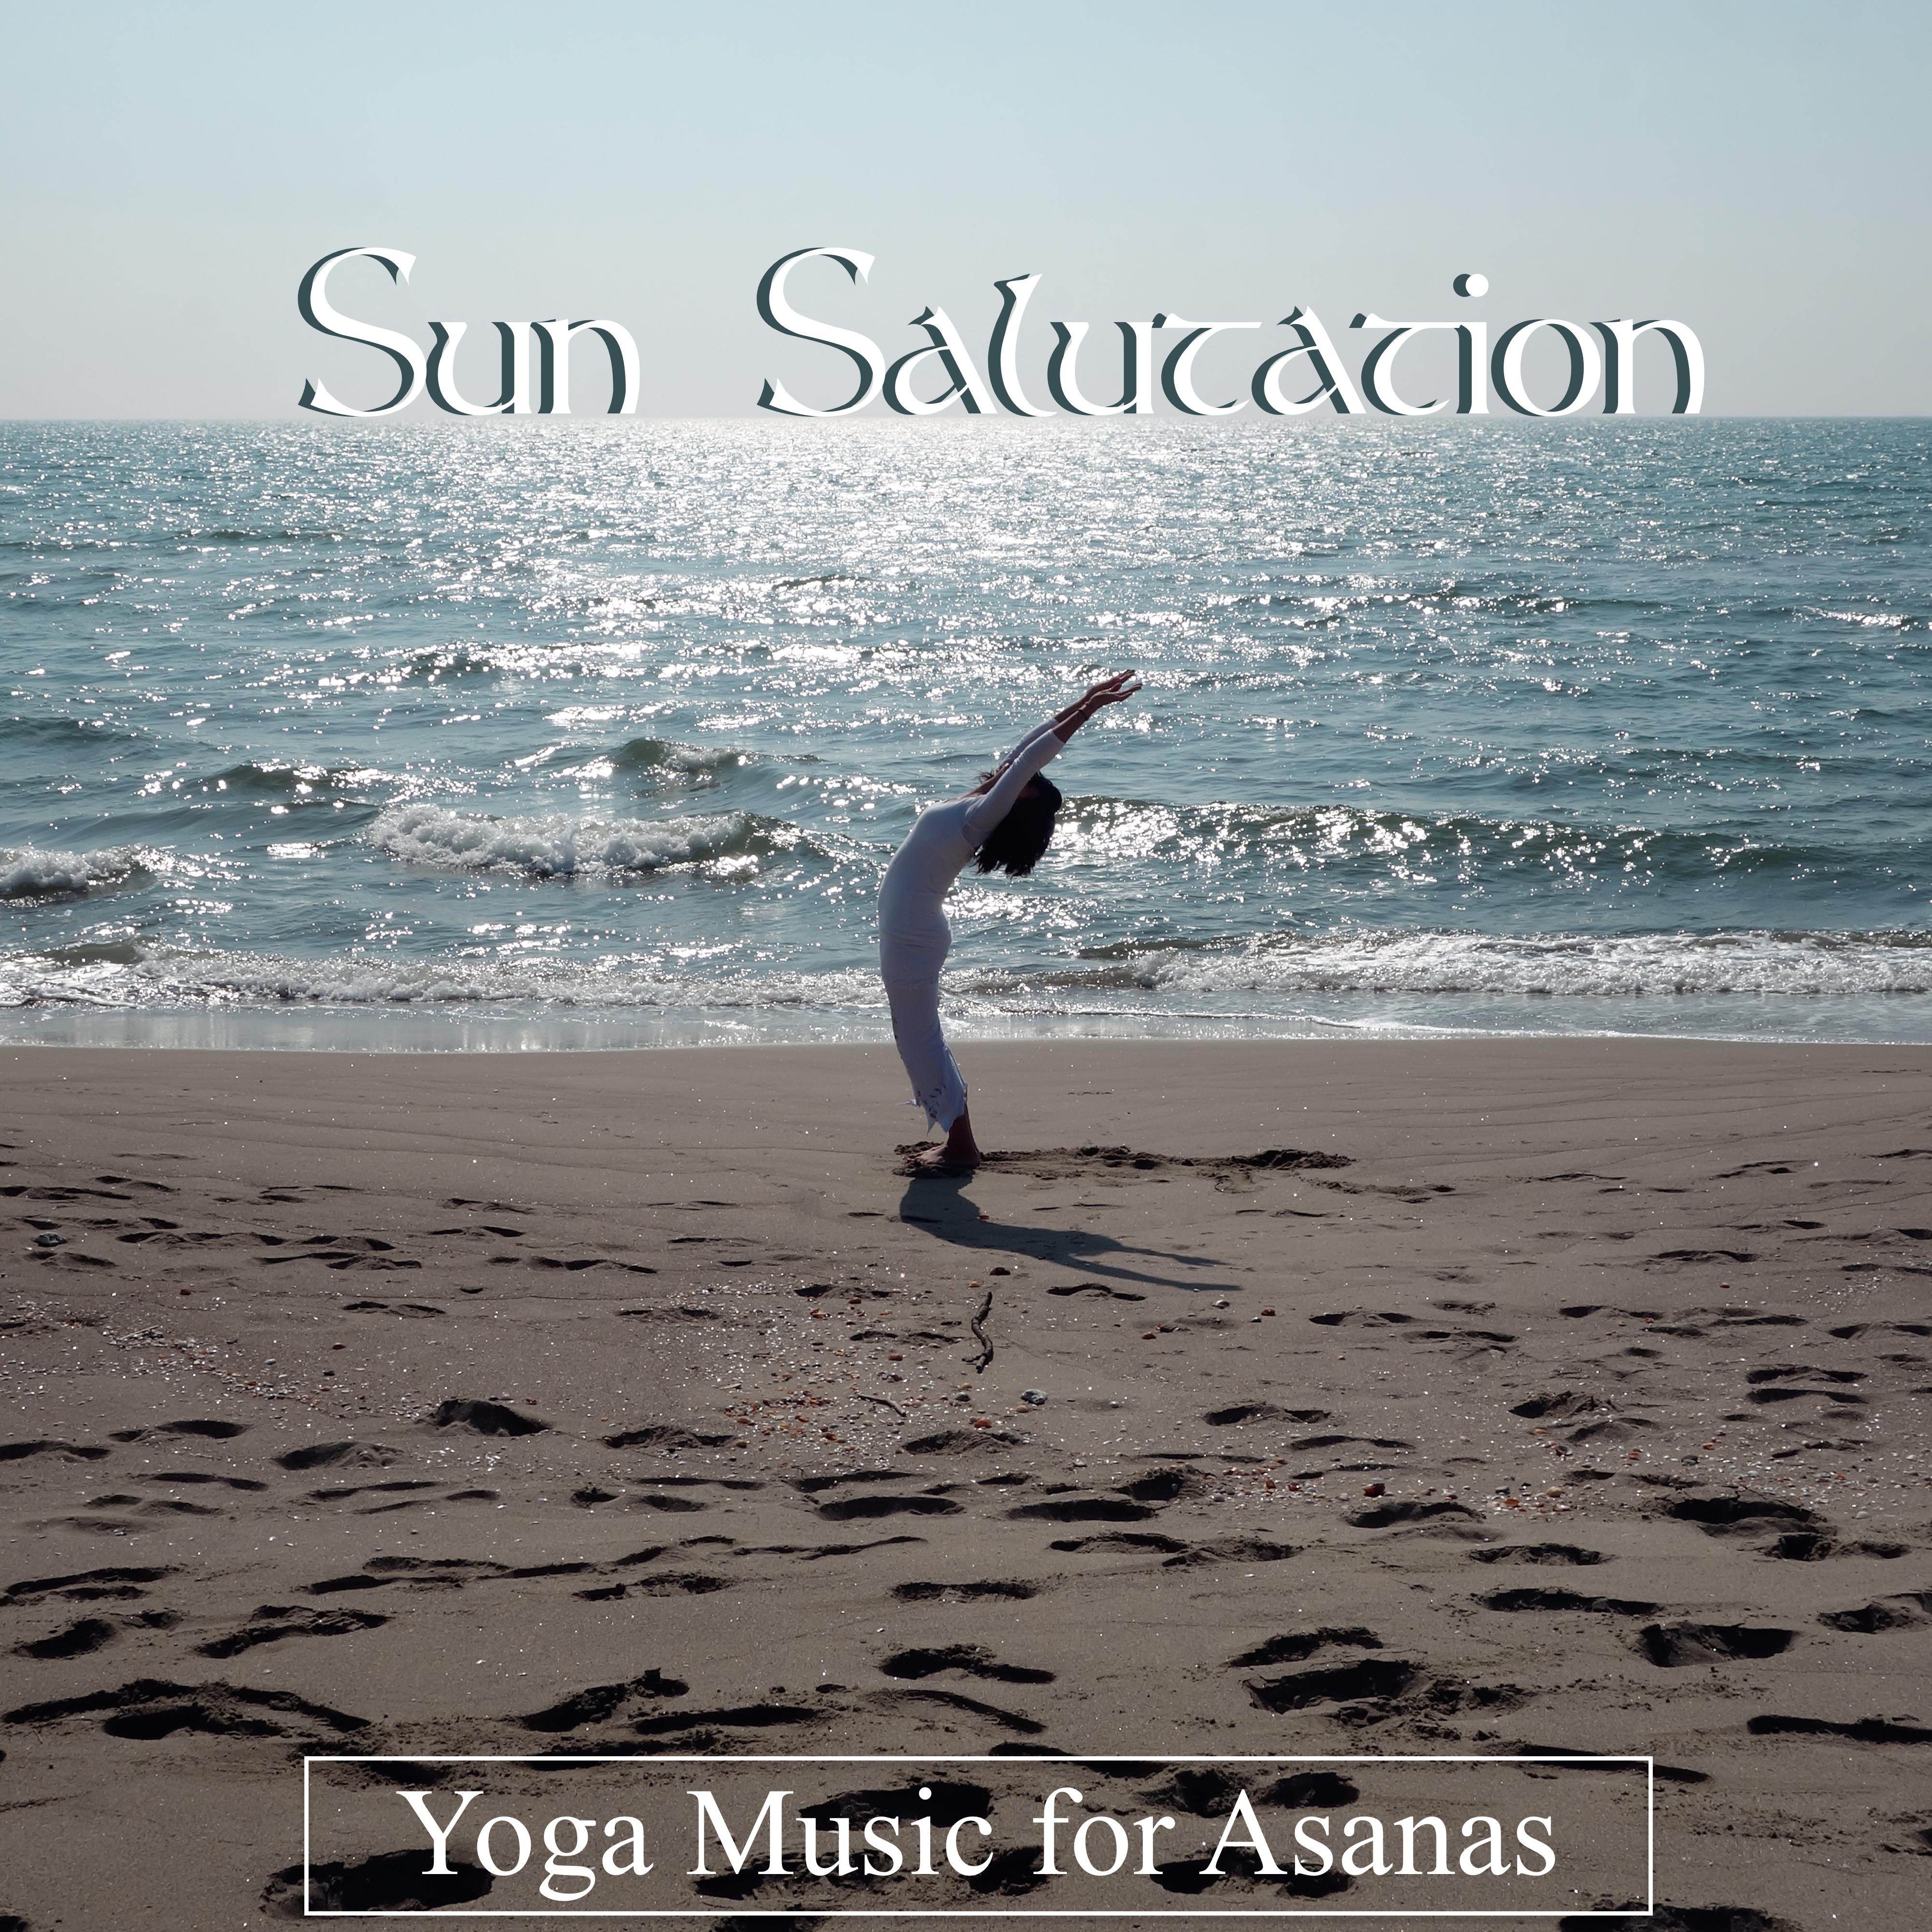 Sun Salutation - Yoga Music for Asanas